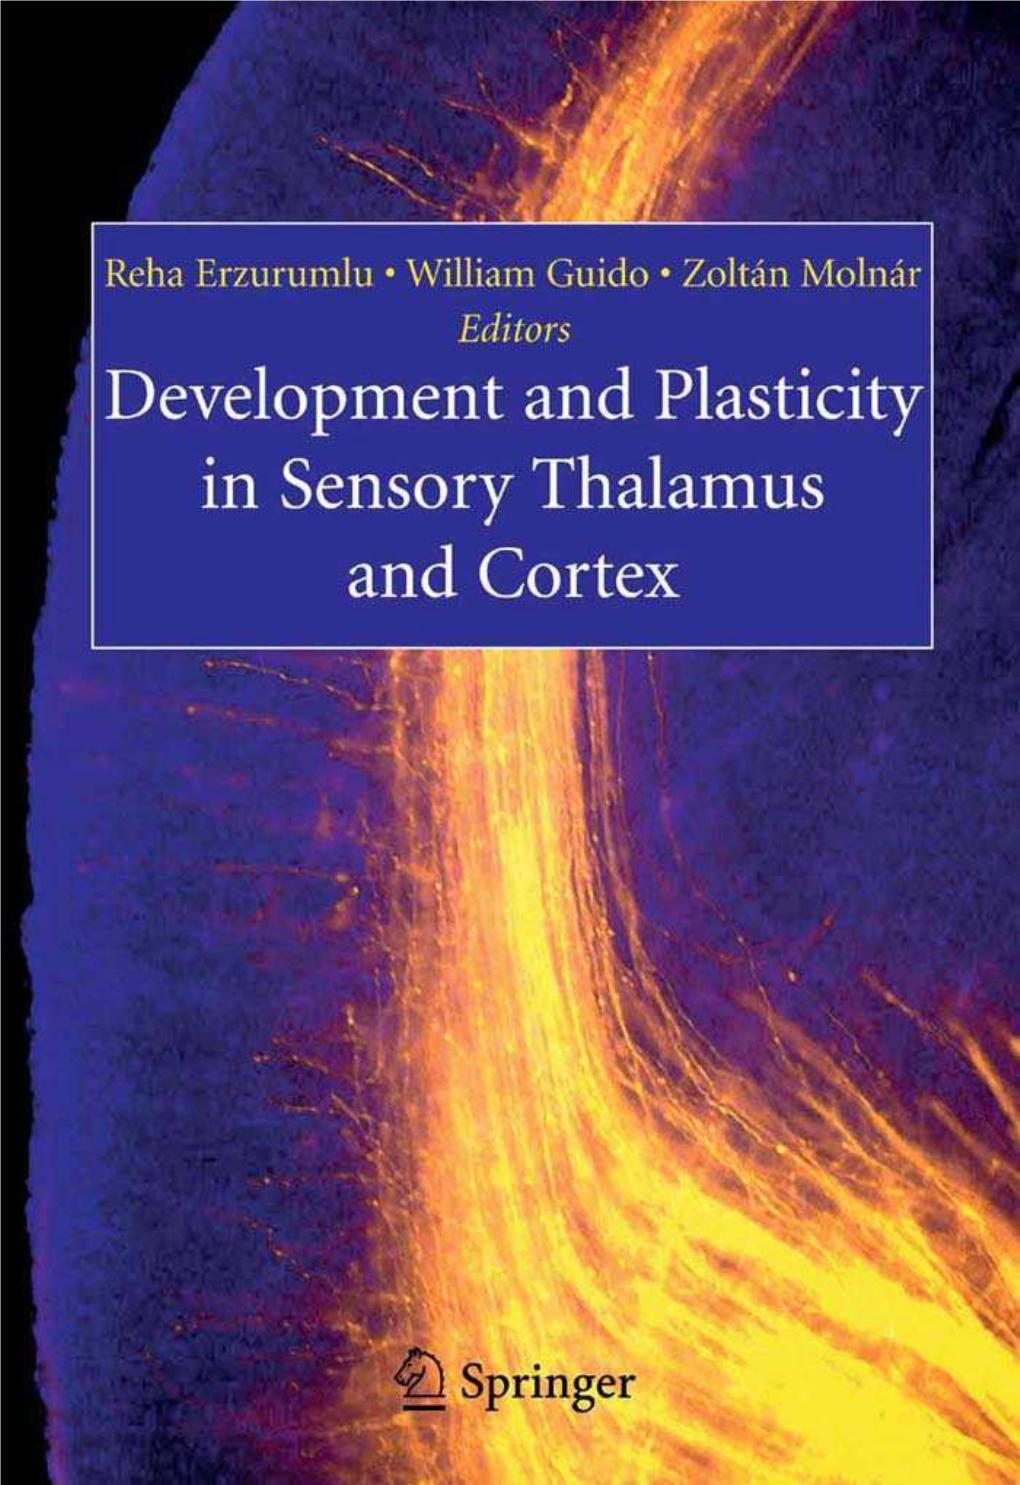 Development and Plasticity in Sensory Thalamus